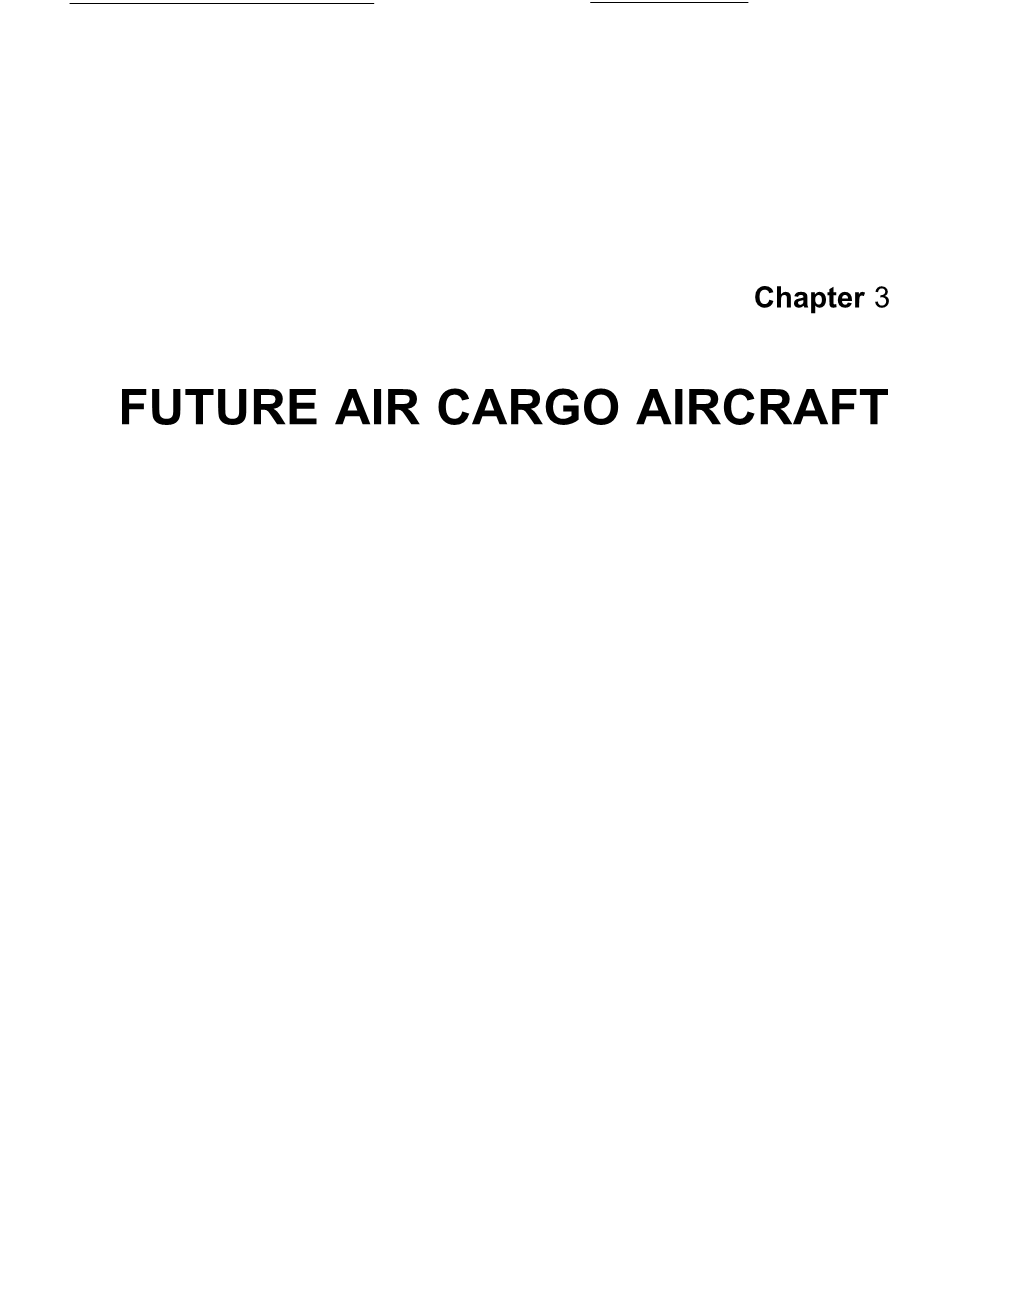 FUTURE AIR CARGO AIRCRAFT Chapter 3